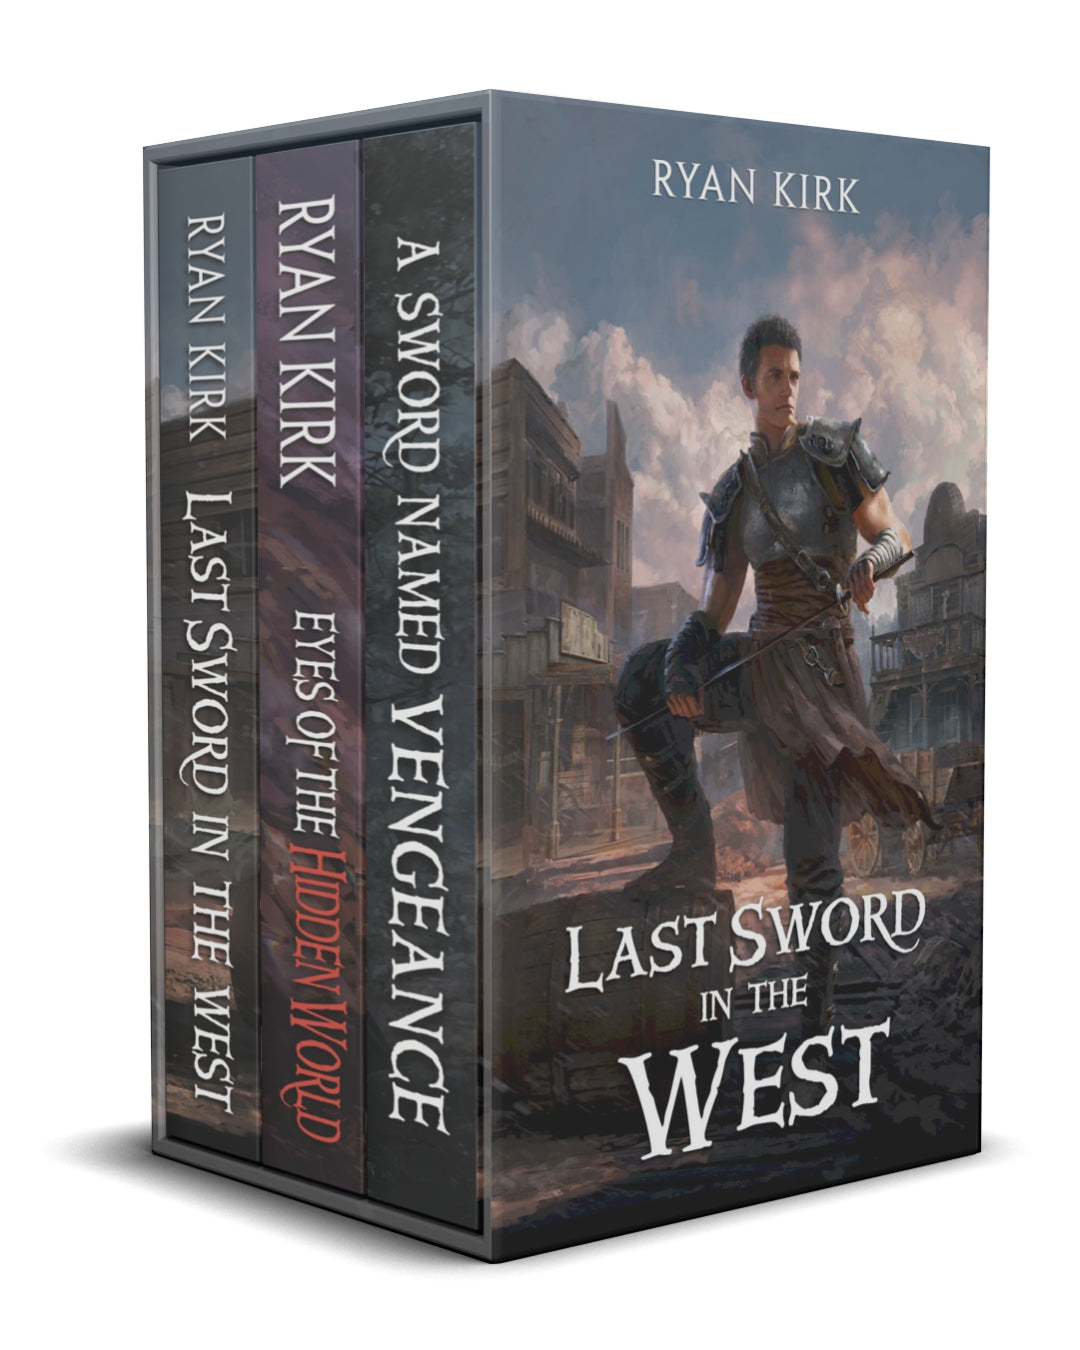 Last Sword in the West Ebook Bundle